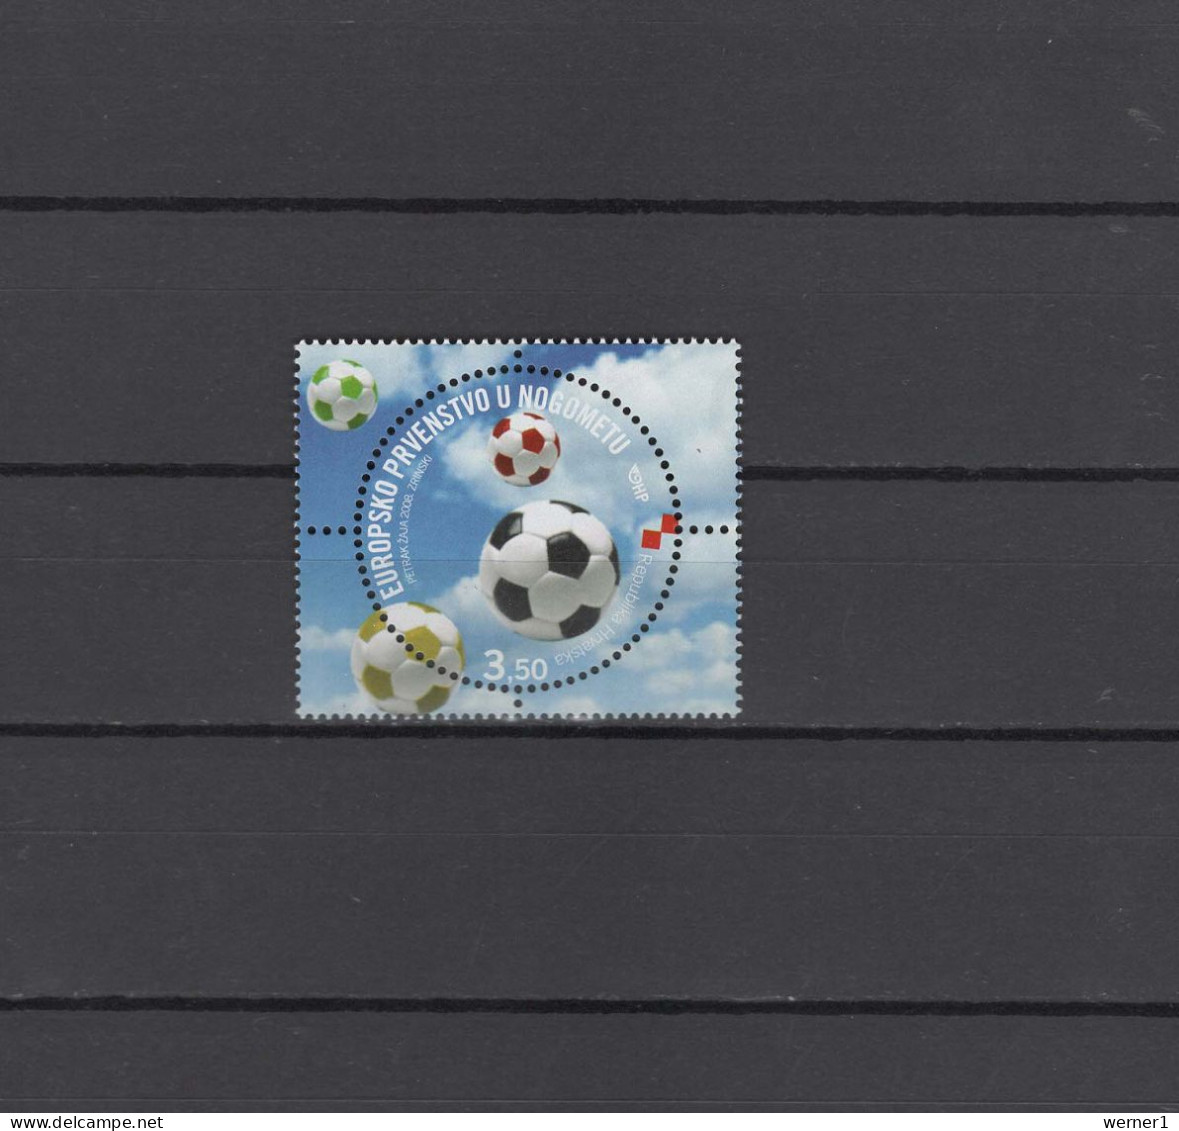 Croatia 2008 Football Soccer European Championship Stamp MNH - UEFA European Championship